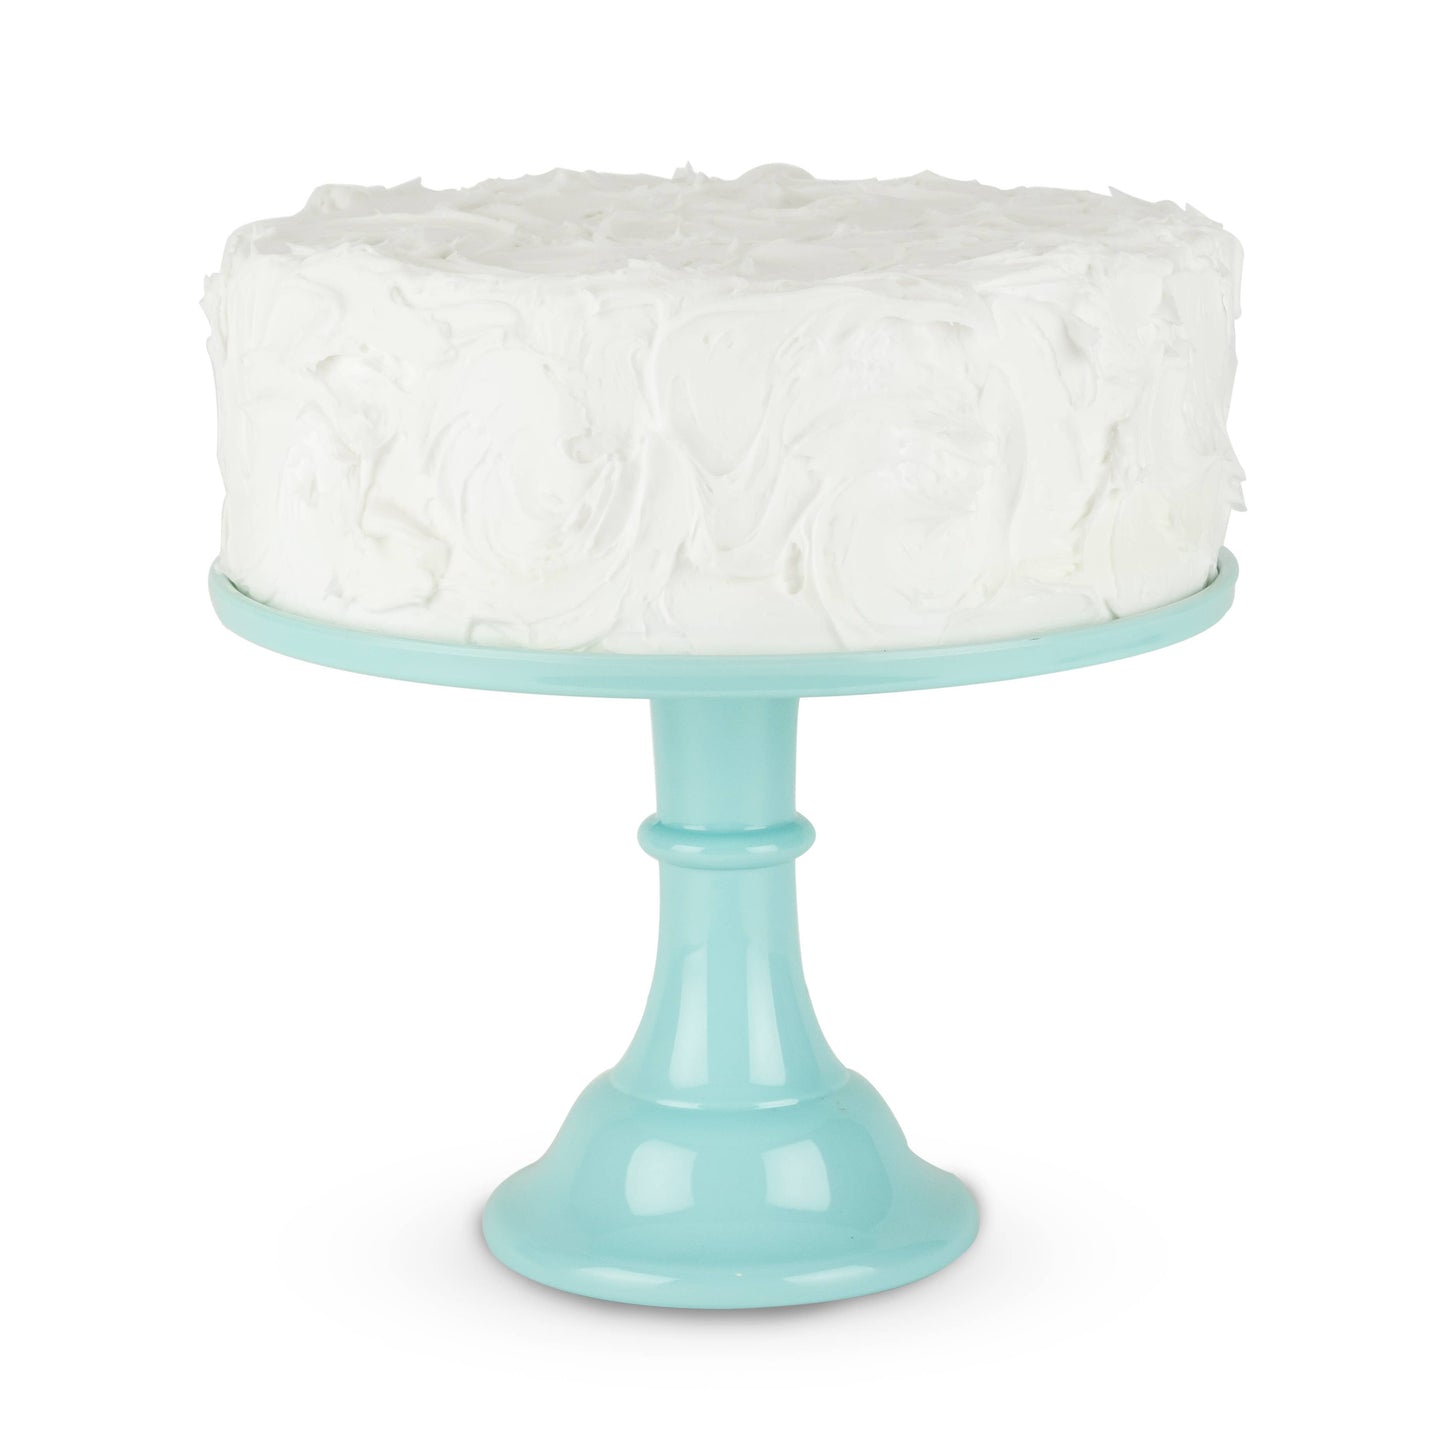 Mint Melamine Cake Stand